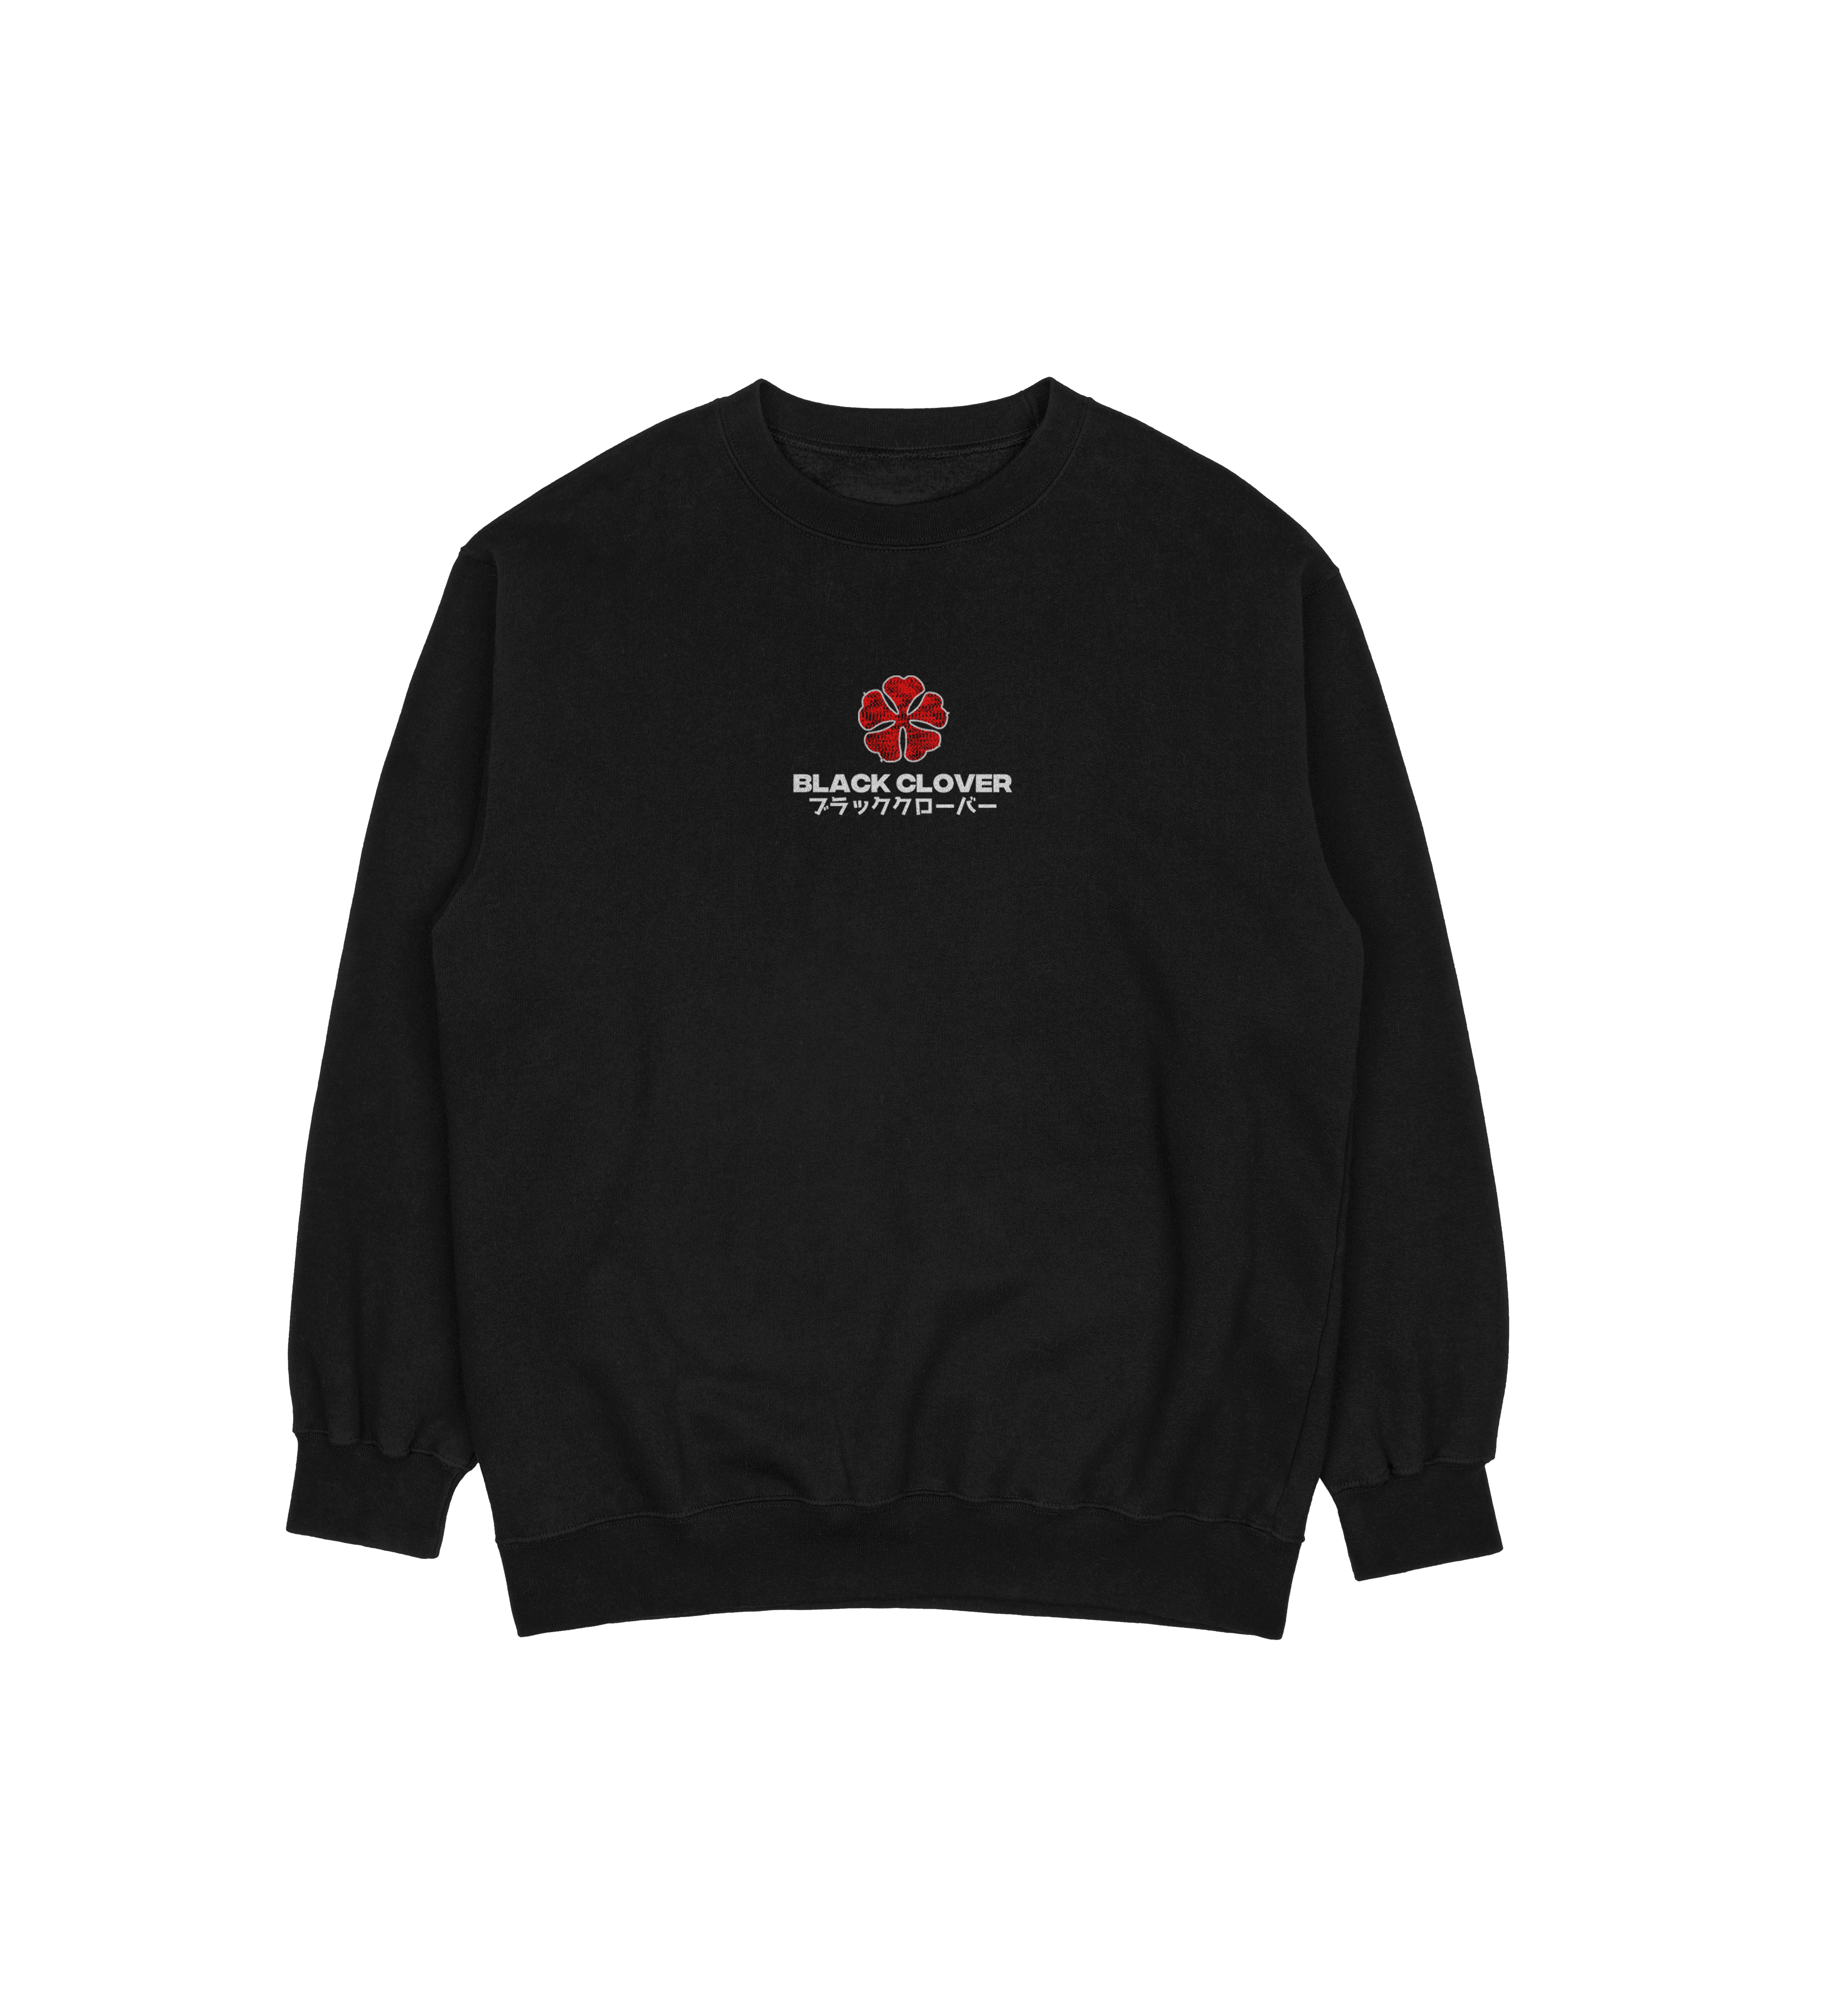 Rivals Black Clover | Sweatshirt